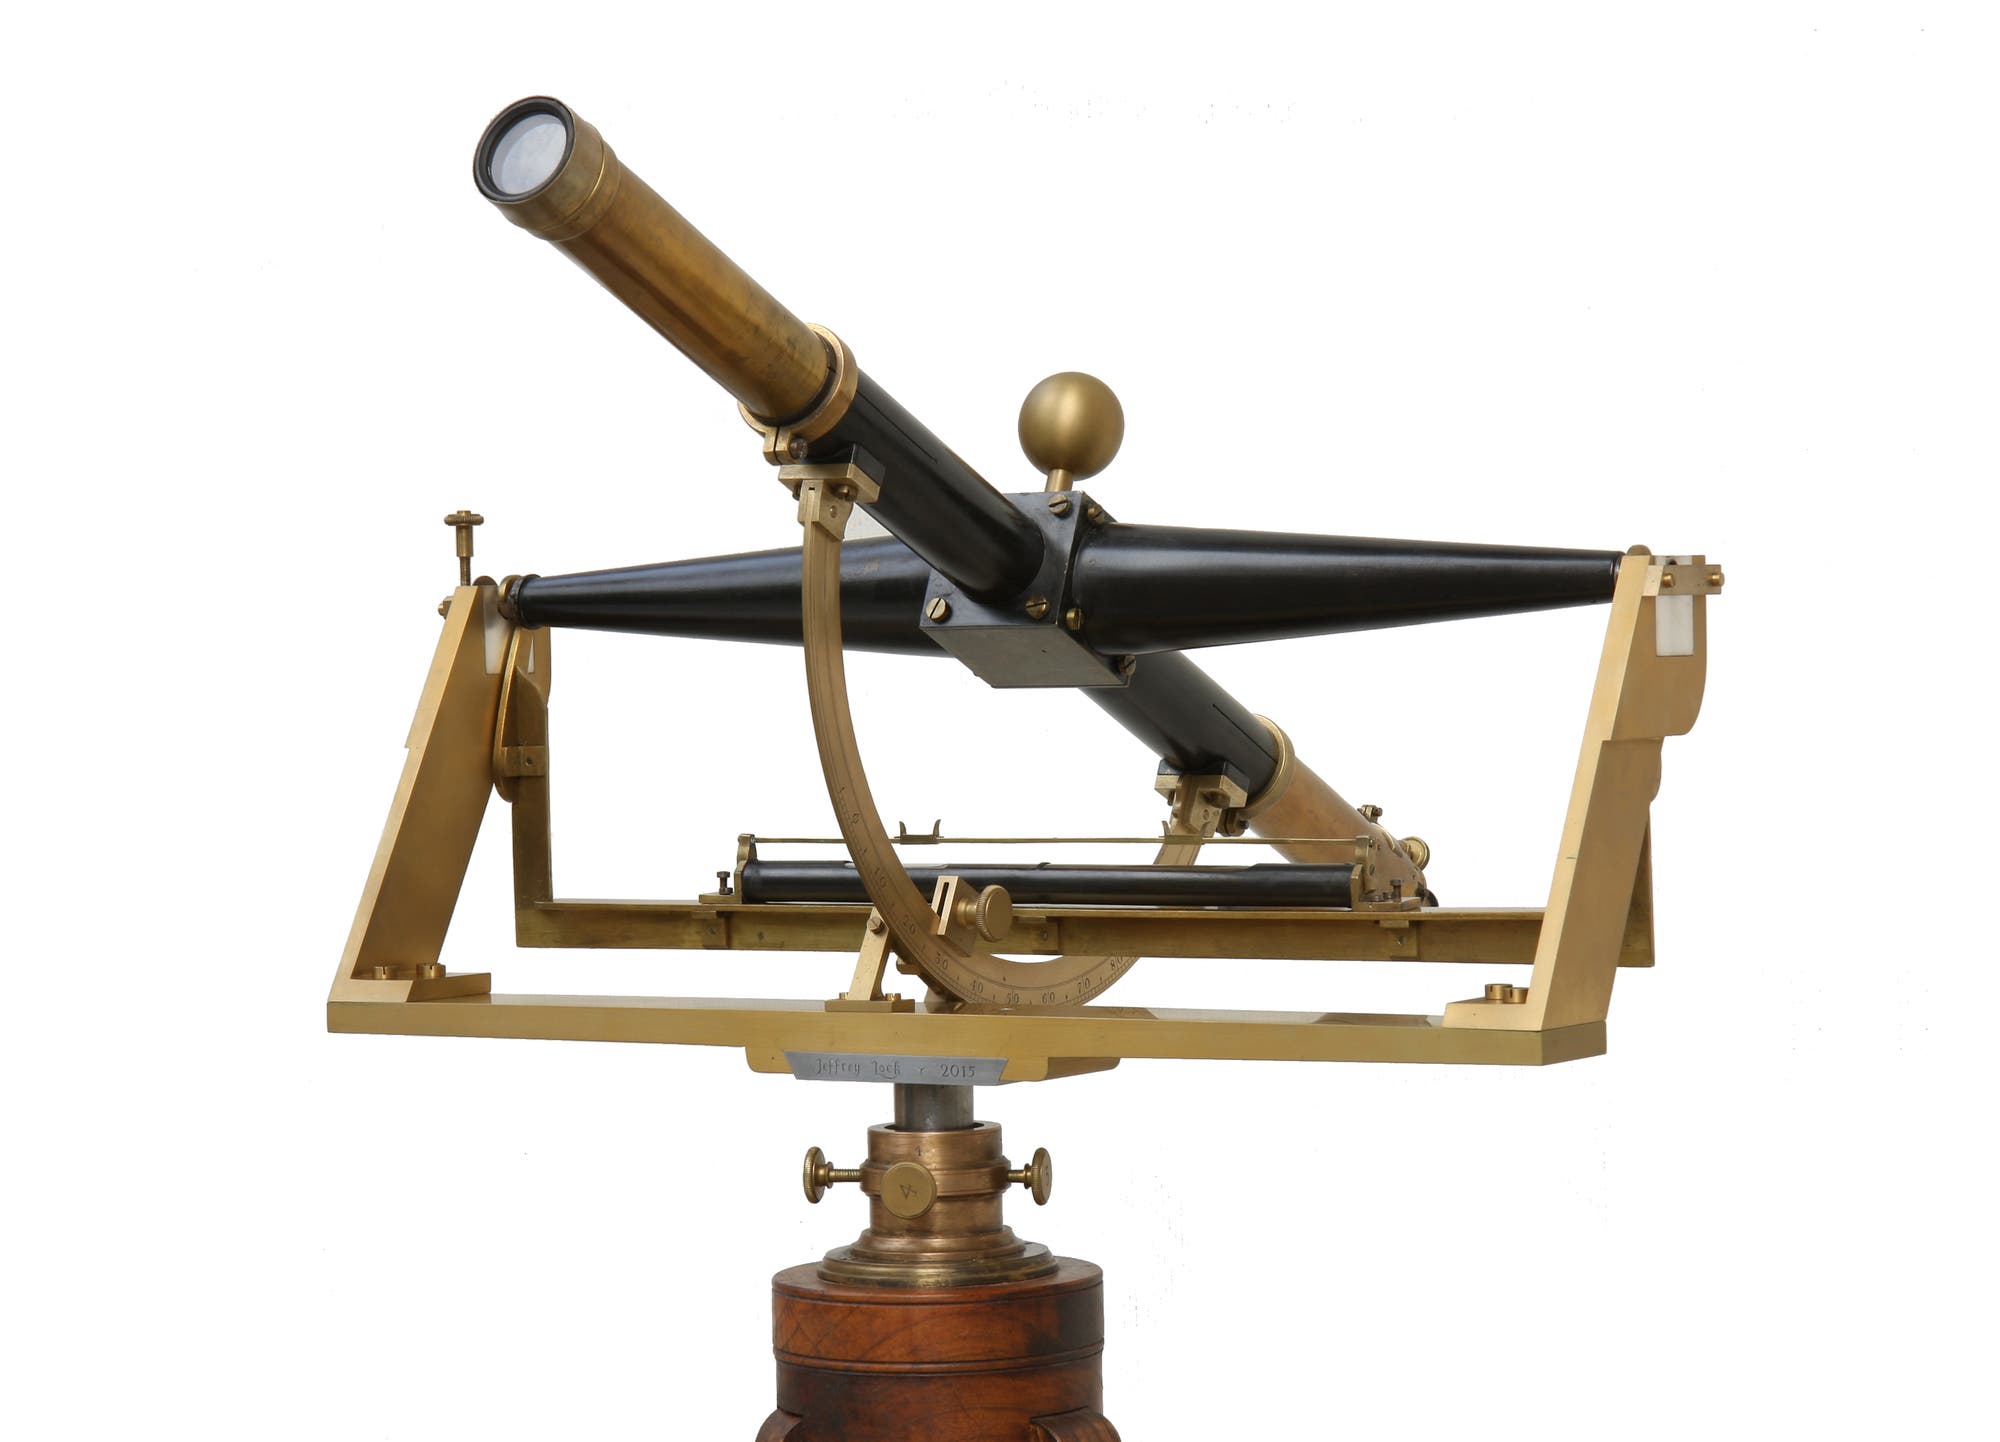 John Bird's Transitteleskop